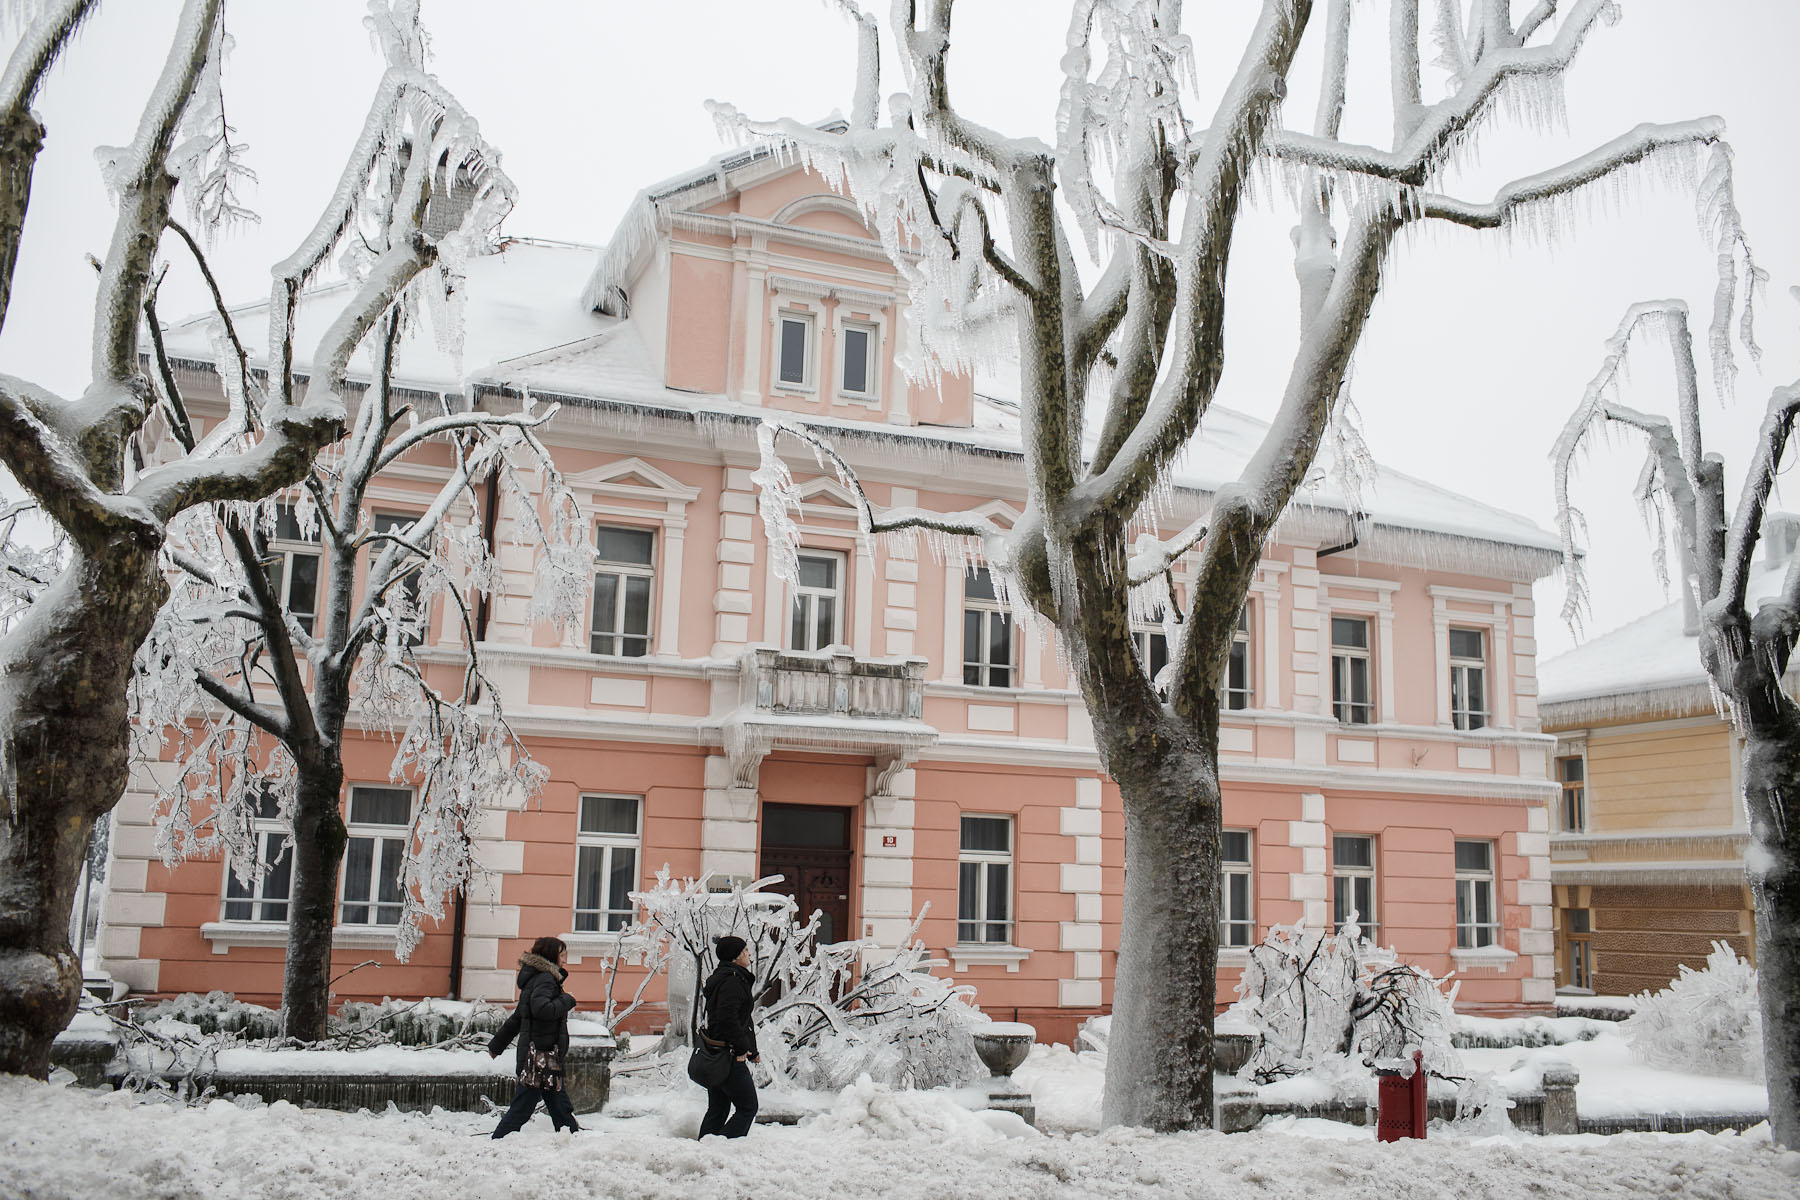 People walk down a street in the frozen town of Postojna, Slovenia, February 5 2014.